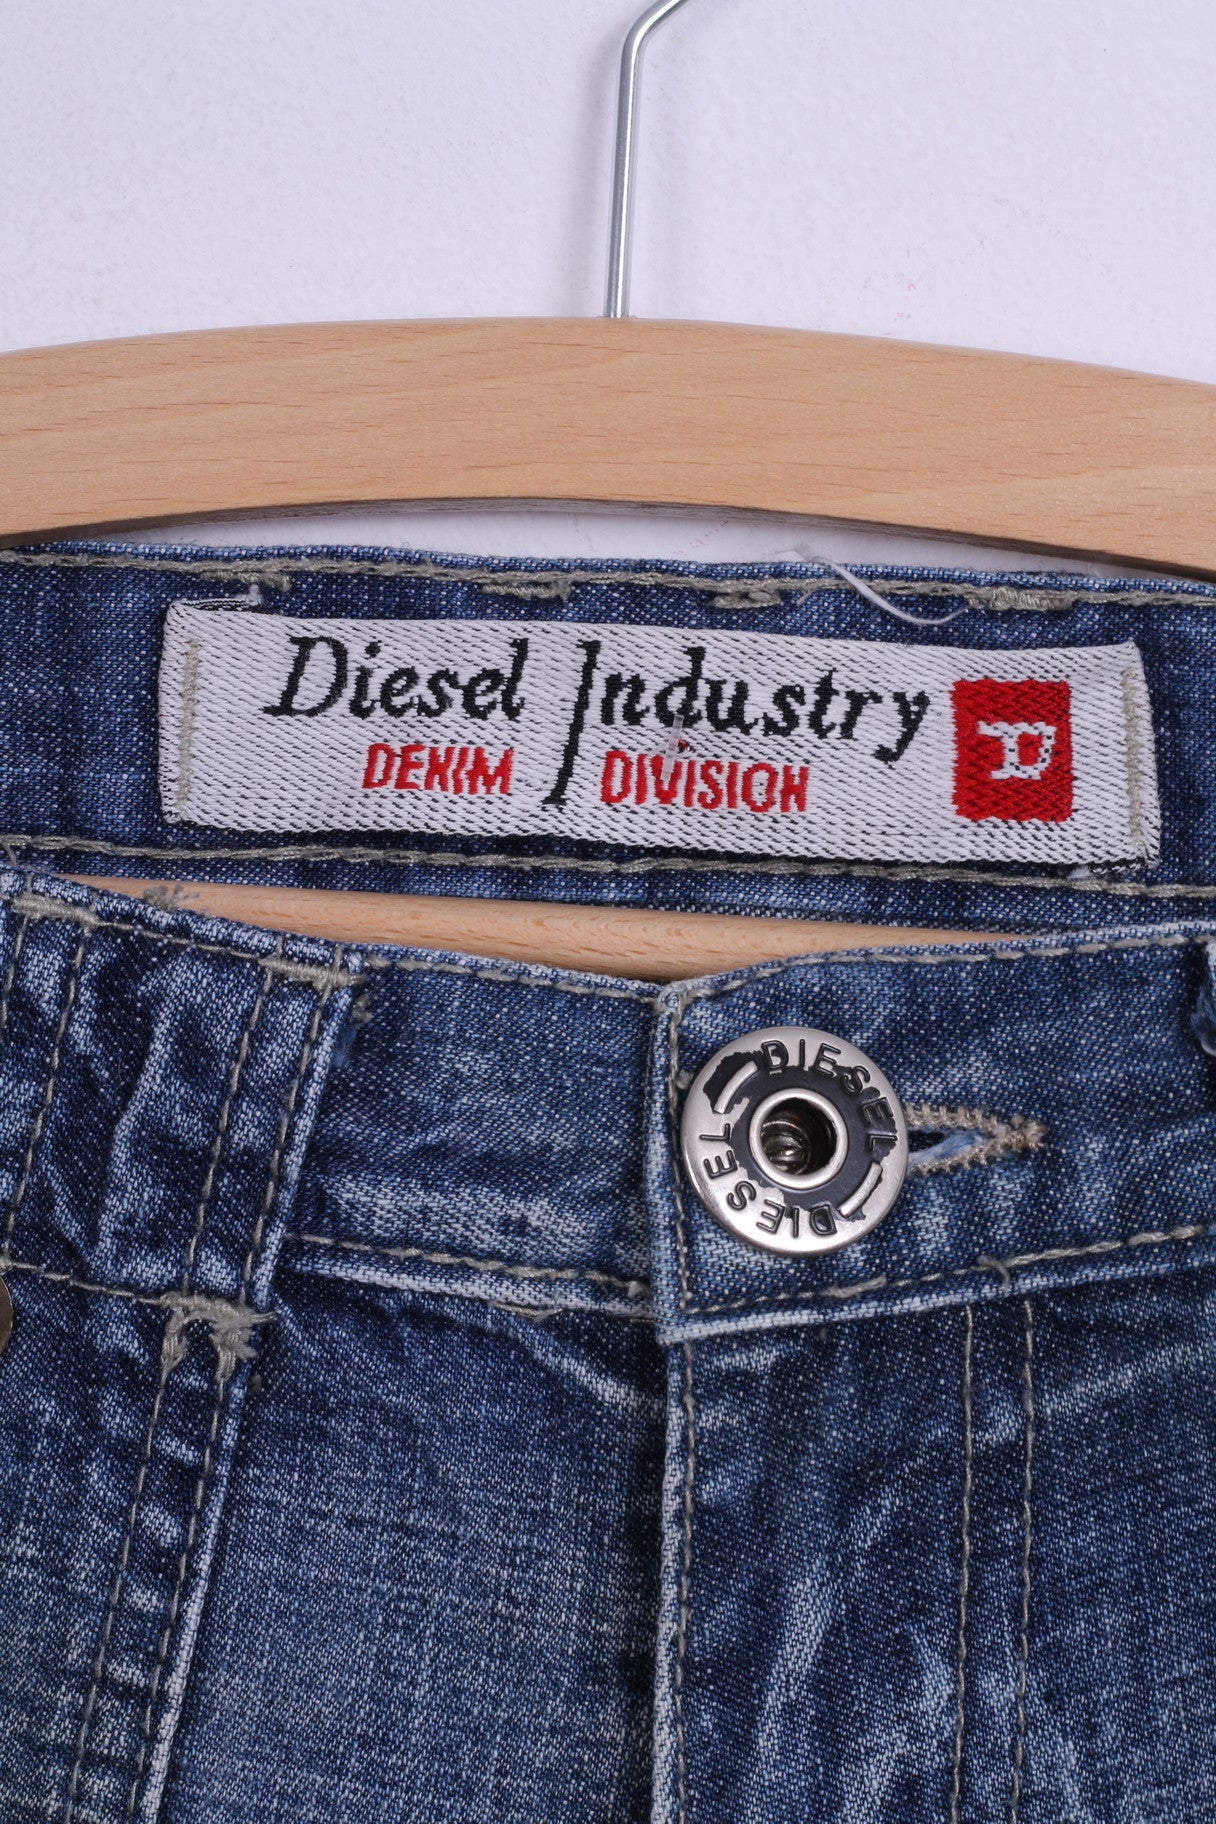 Diesel Industry Womens 29 Trousers Jeans Blue Denim Cotton Italy Retrospectclothes